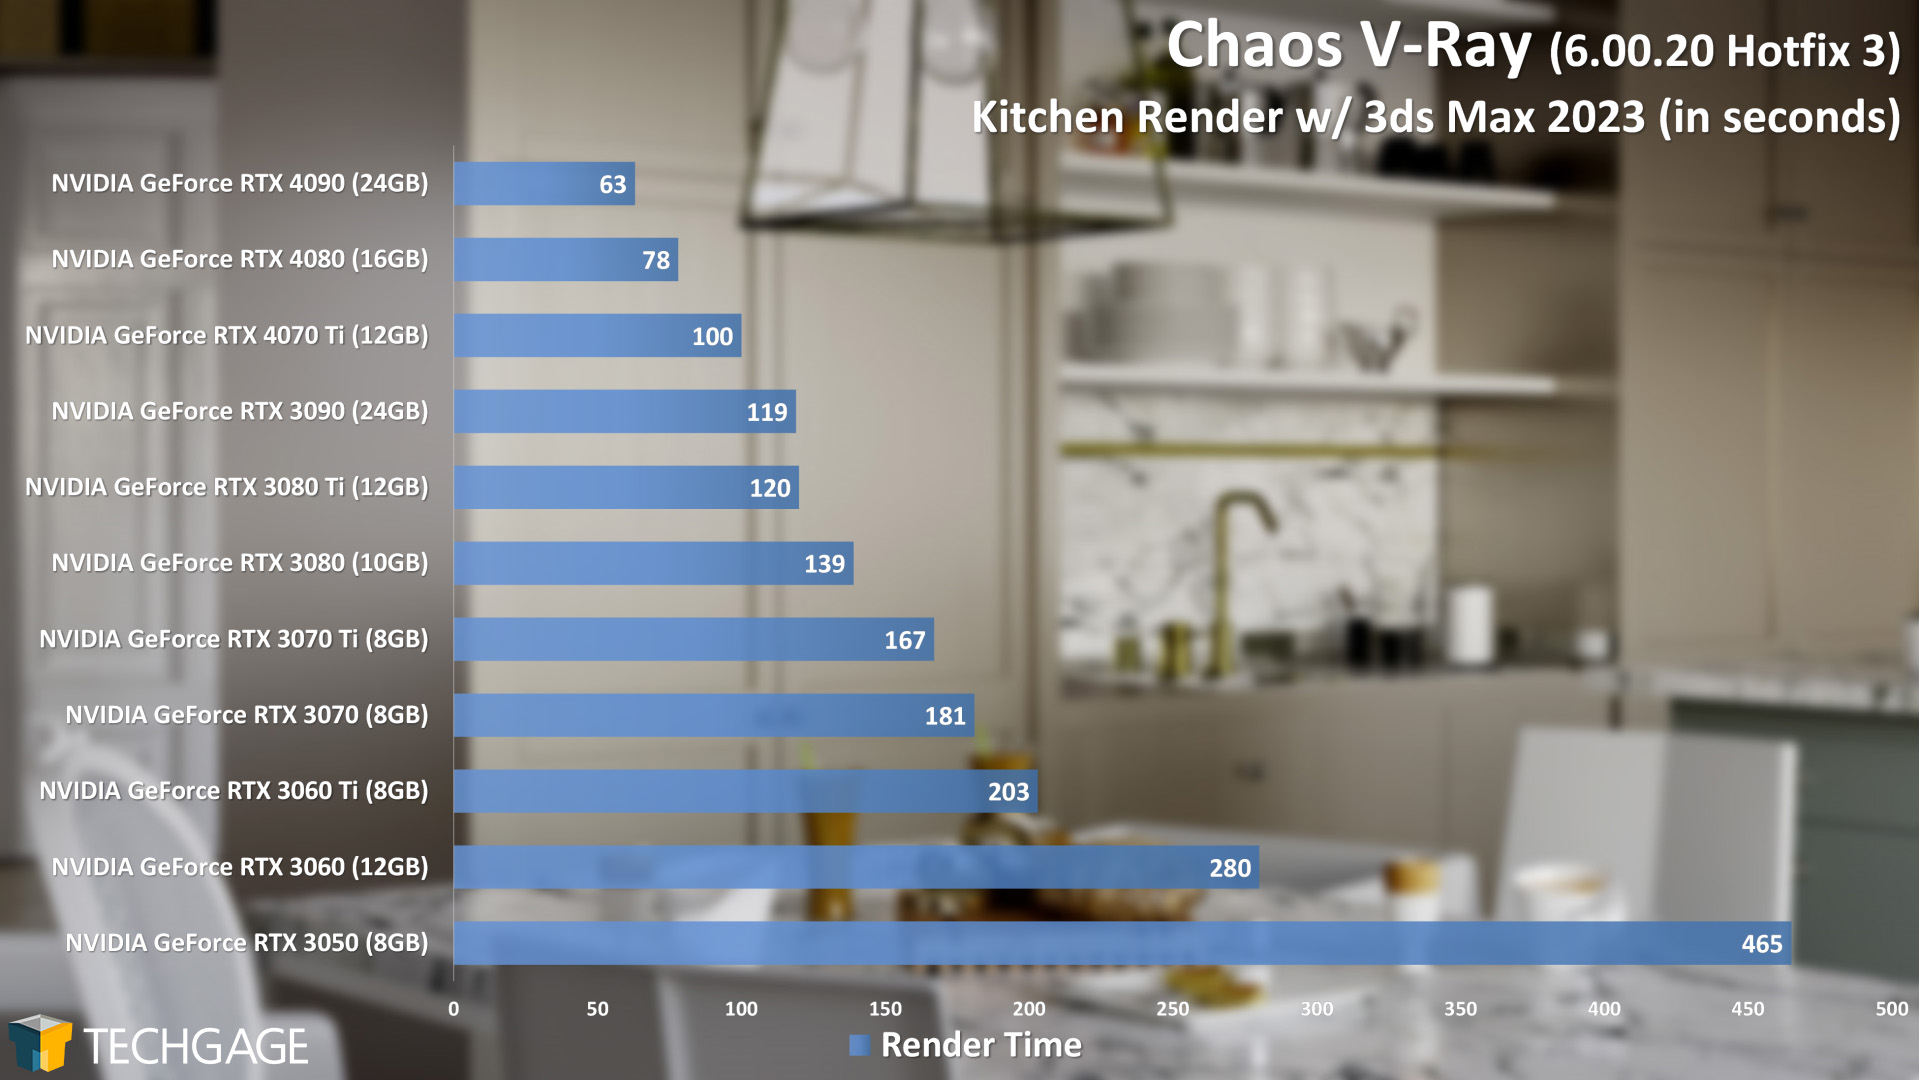 Chaos V-Ray - GPU Rendering Performance (Kitchen)